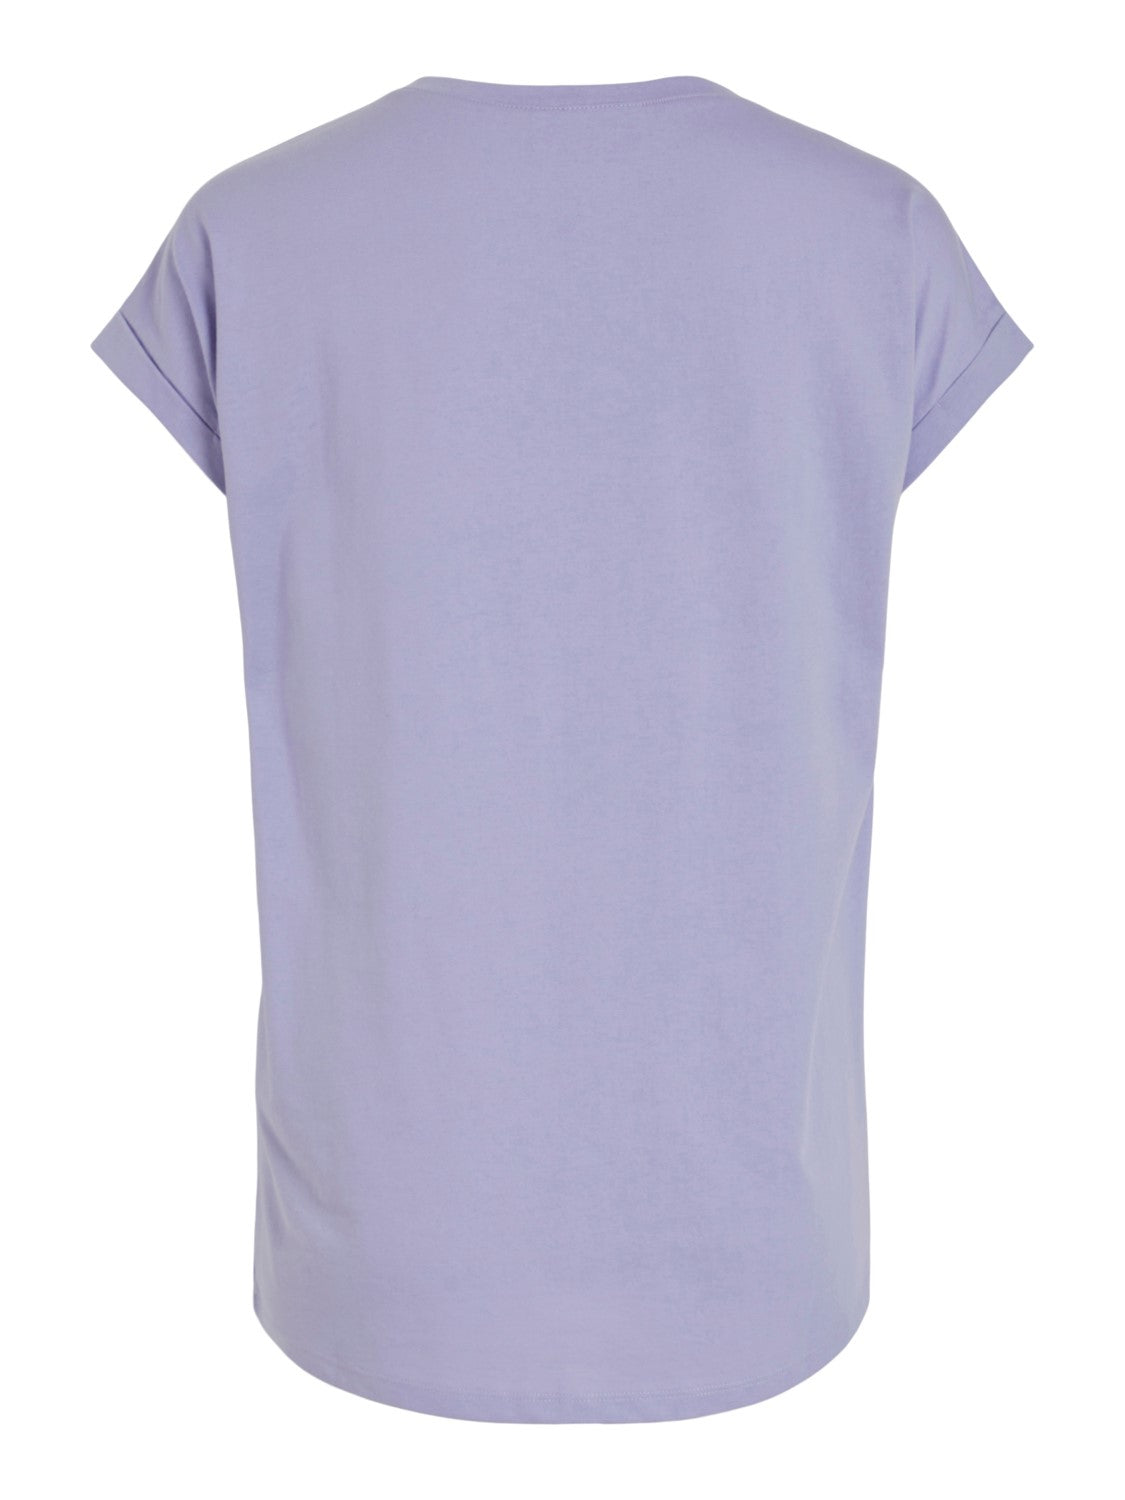 VIDreamers New Pure T-Shirt Sweet Lavender